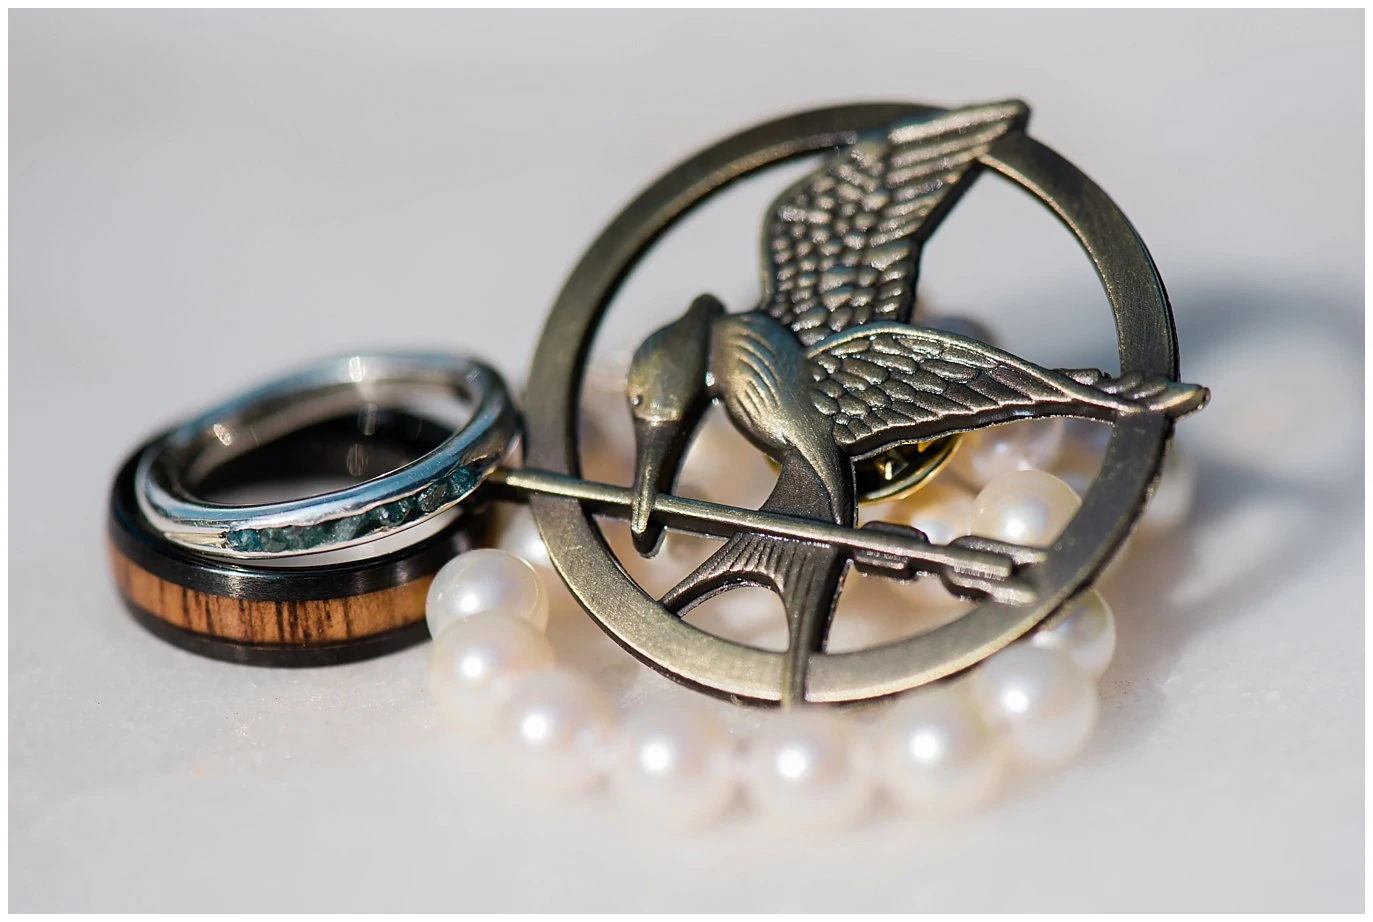 mockingjay pin and wedding rings photo